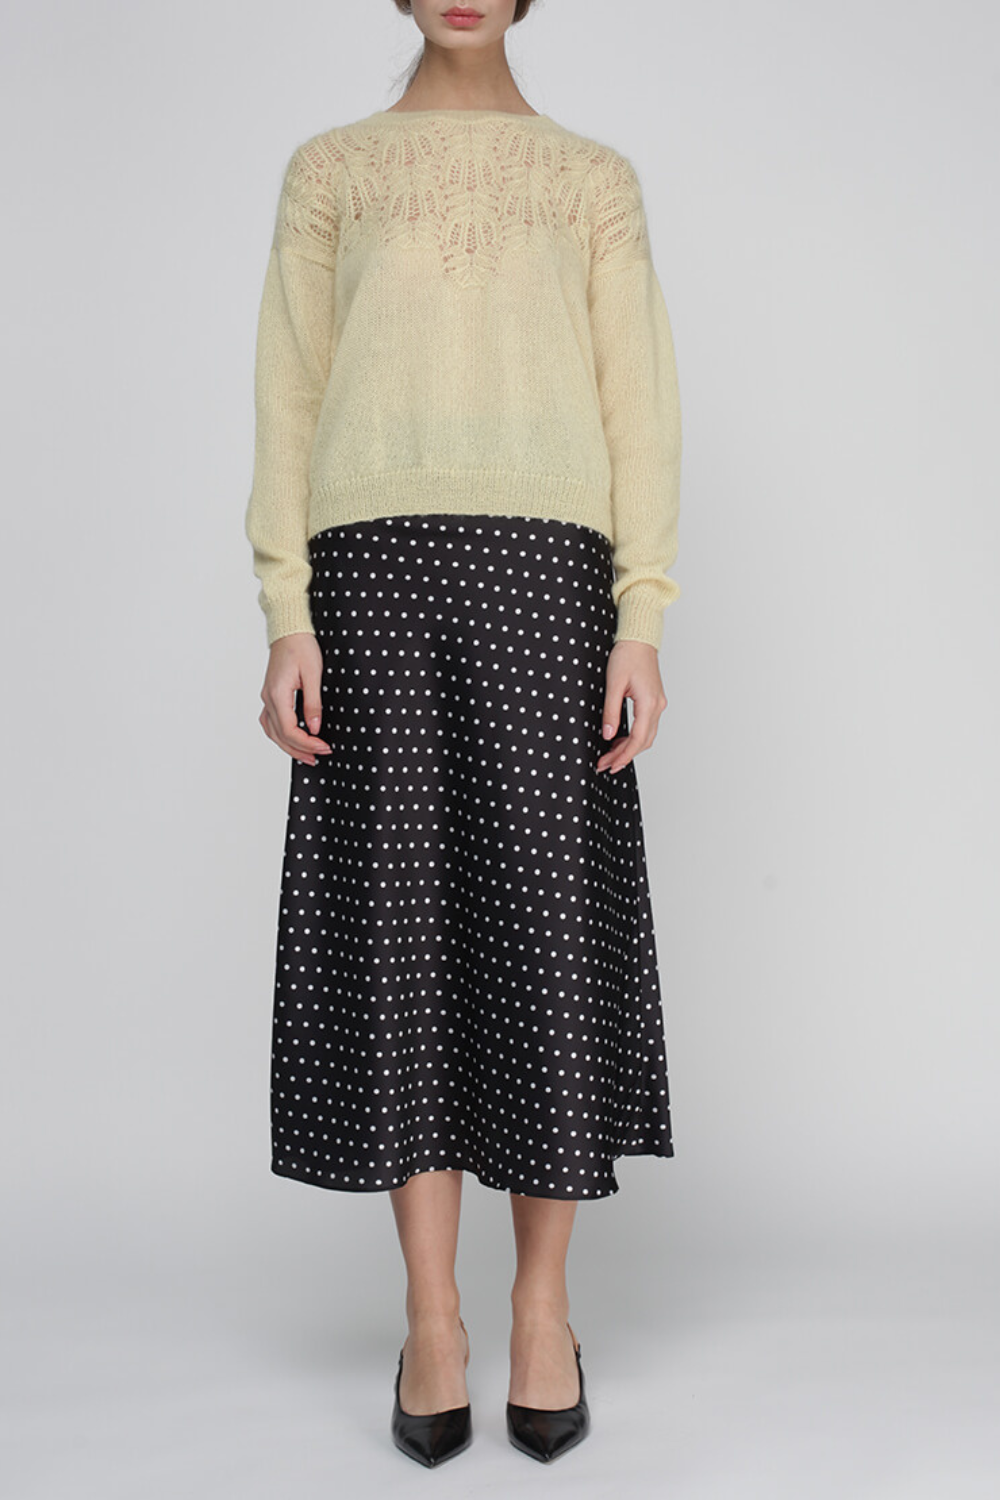 Silk skirt with polka dots on rubber band (Miss Secret) SK-005-black